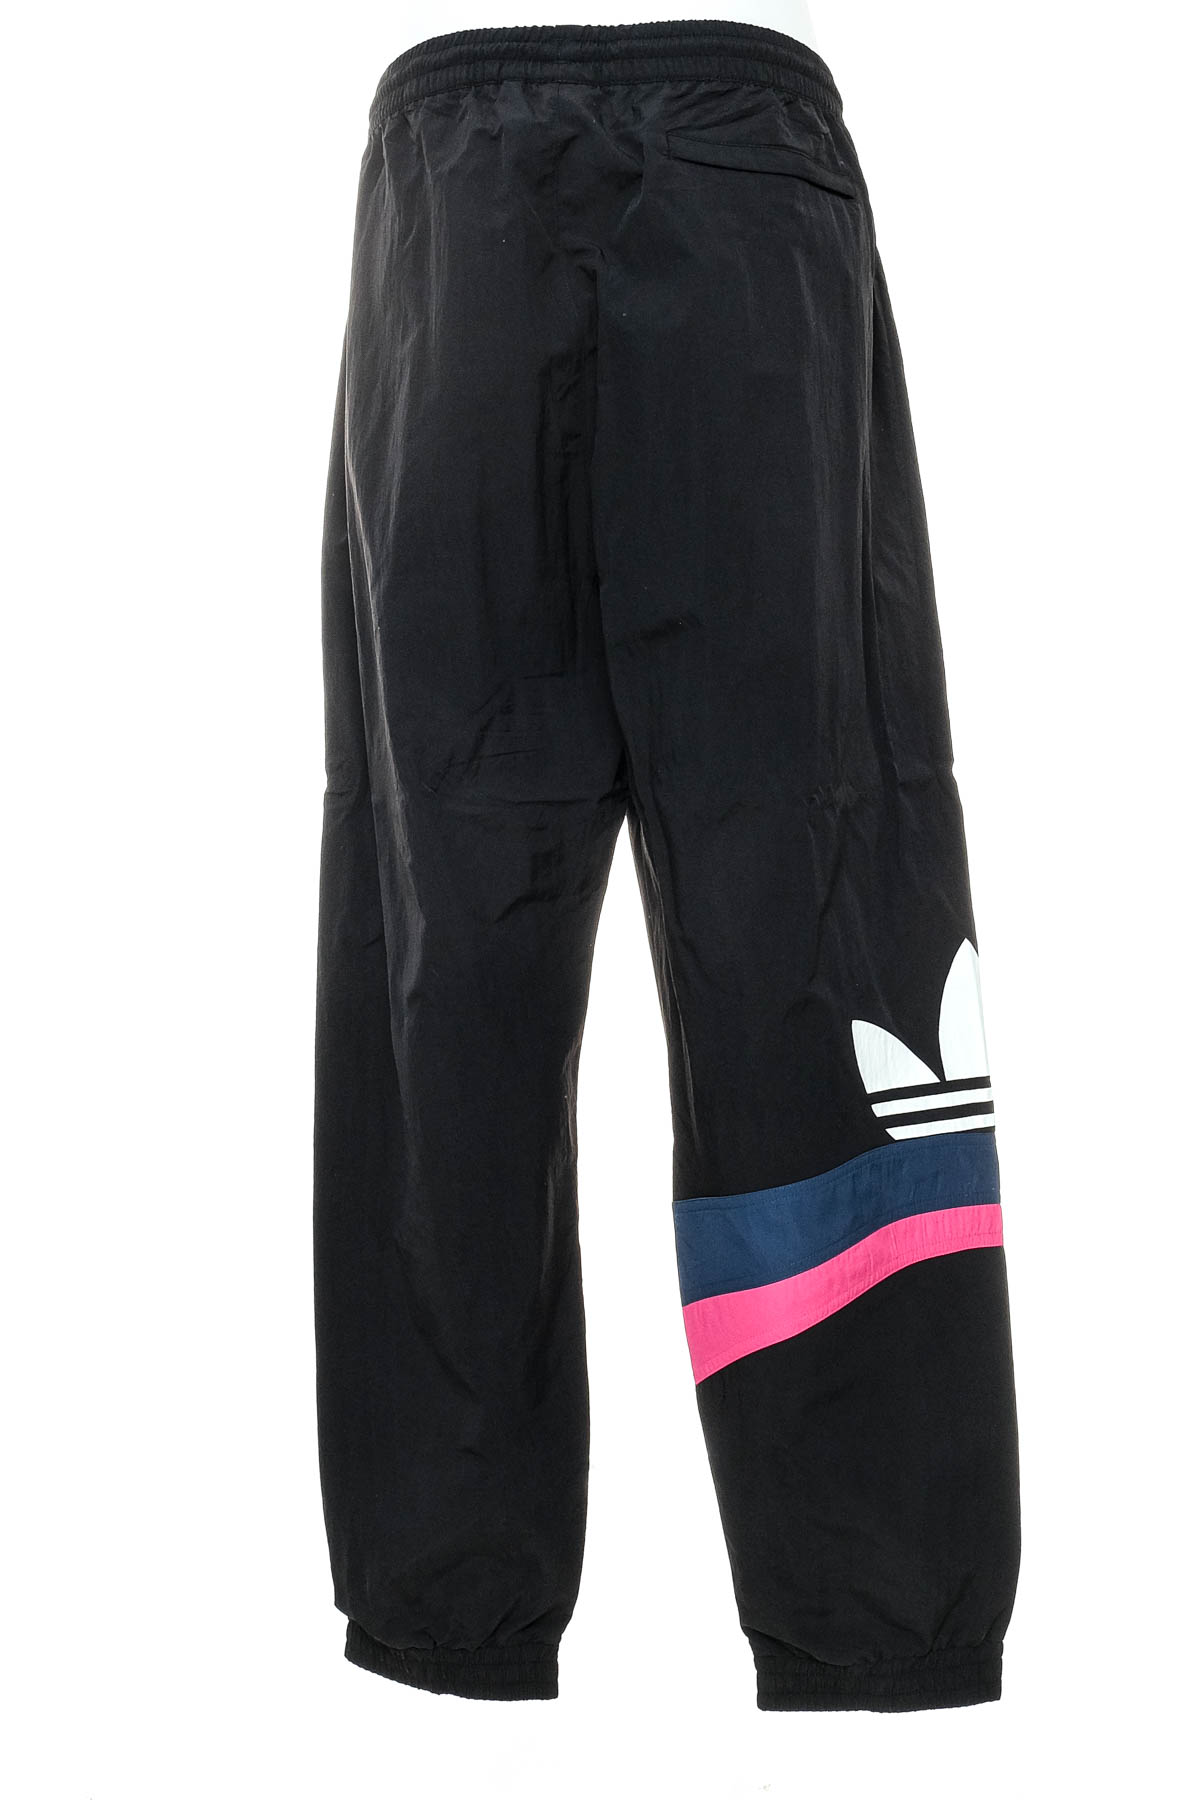 Мъжко спортно долнище - Adidas - 1